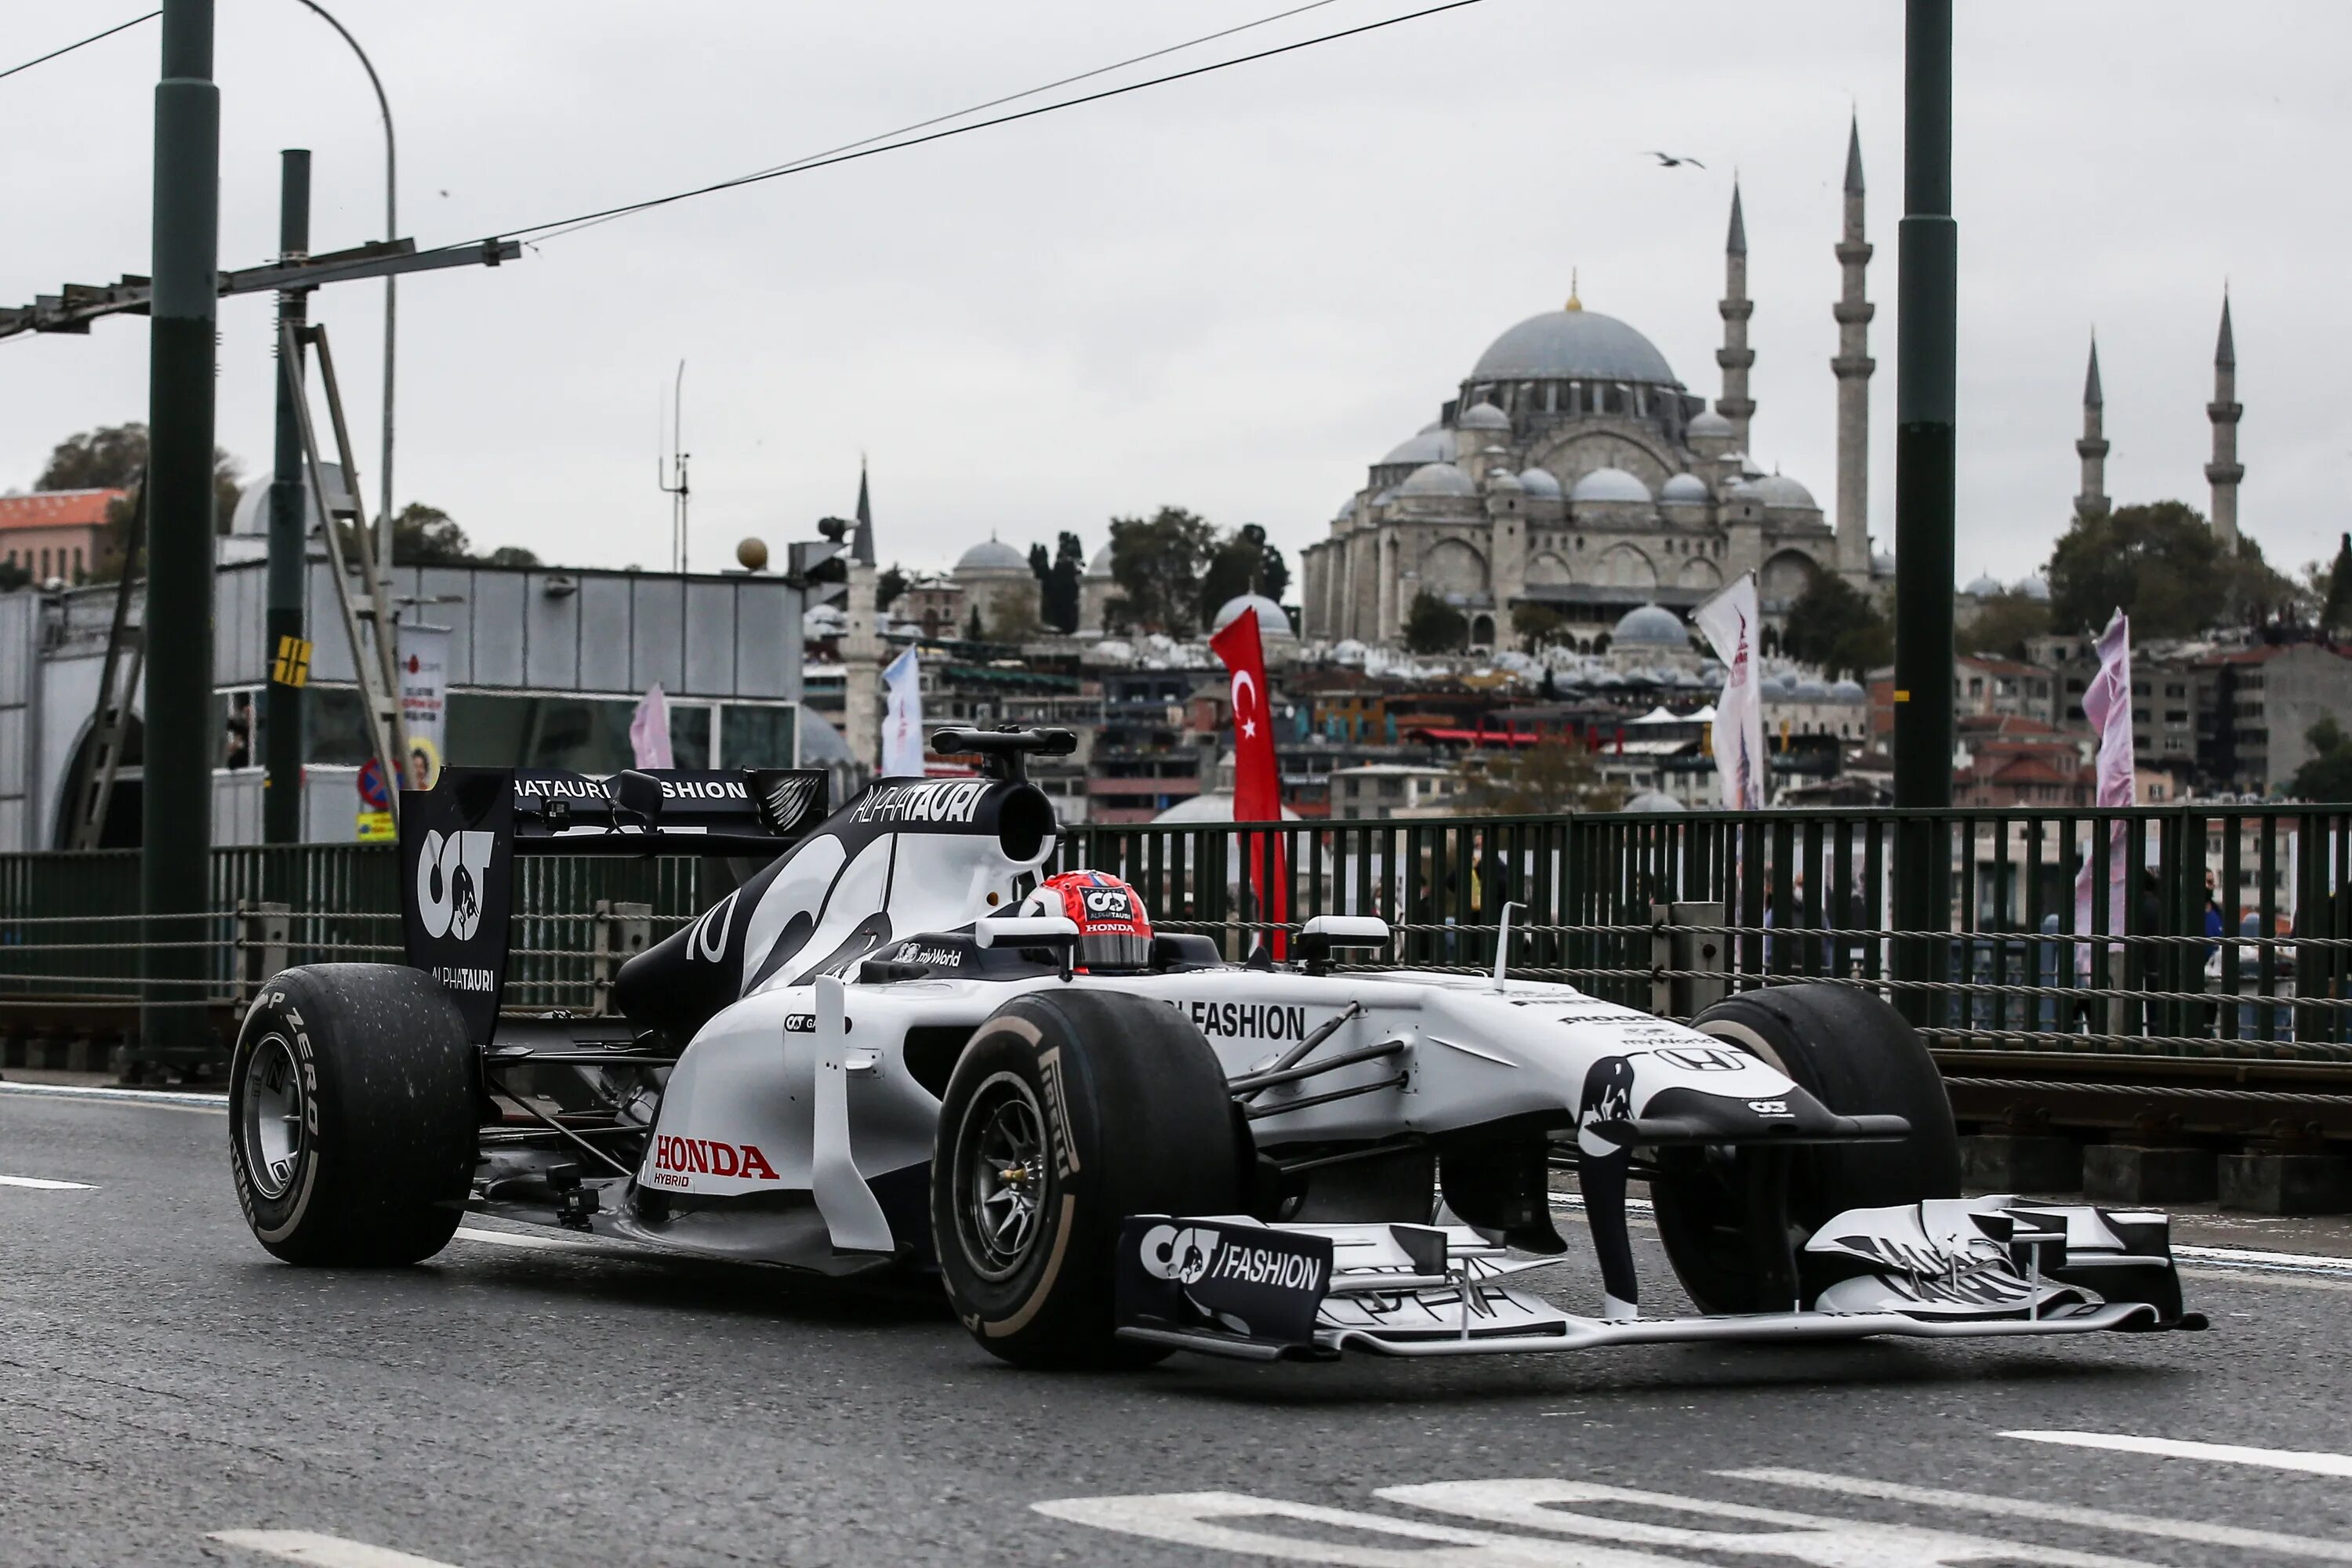 Формула 1 11. Grand prix f1. Formula 1 Grand prix. Формула 1 Istanbul. Истамбул парк формула 1.